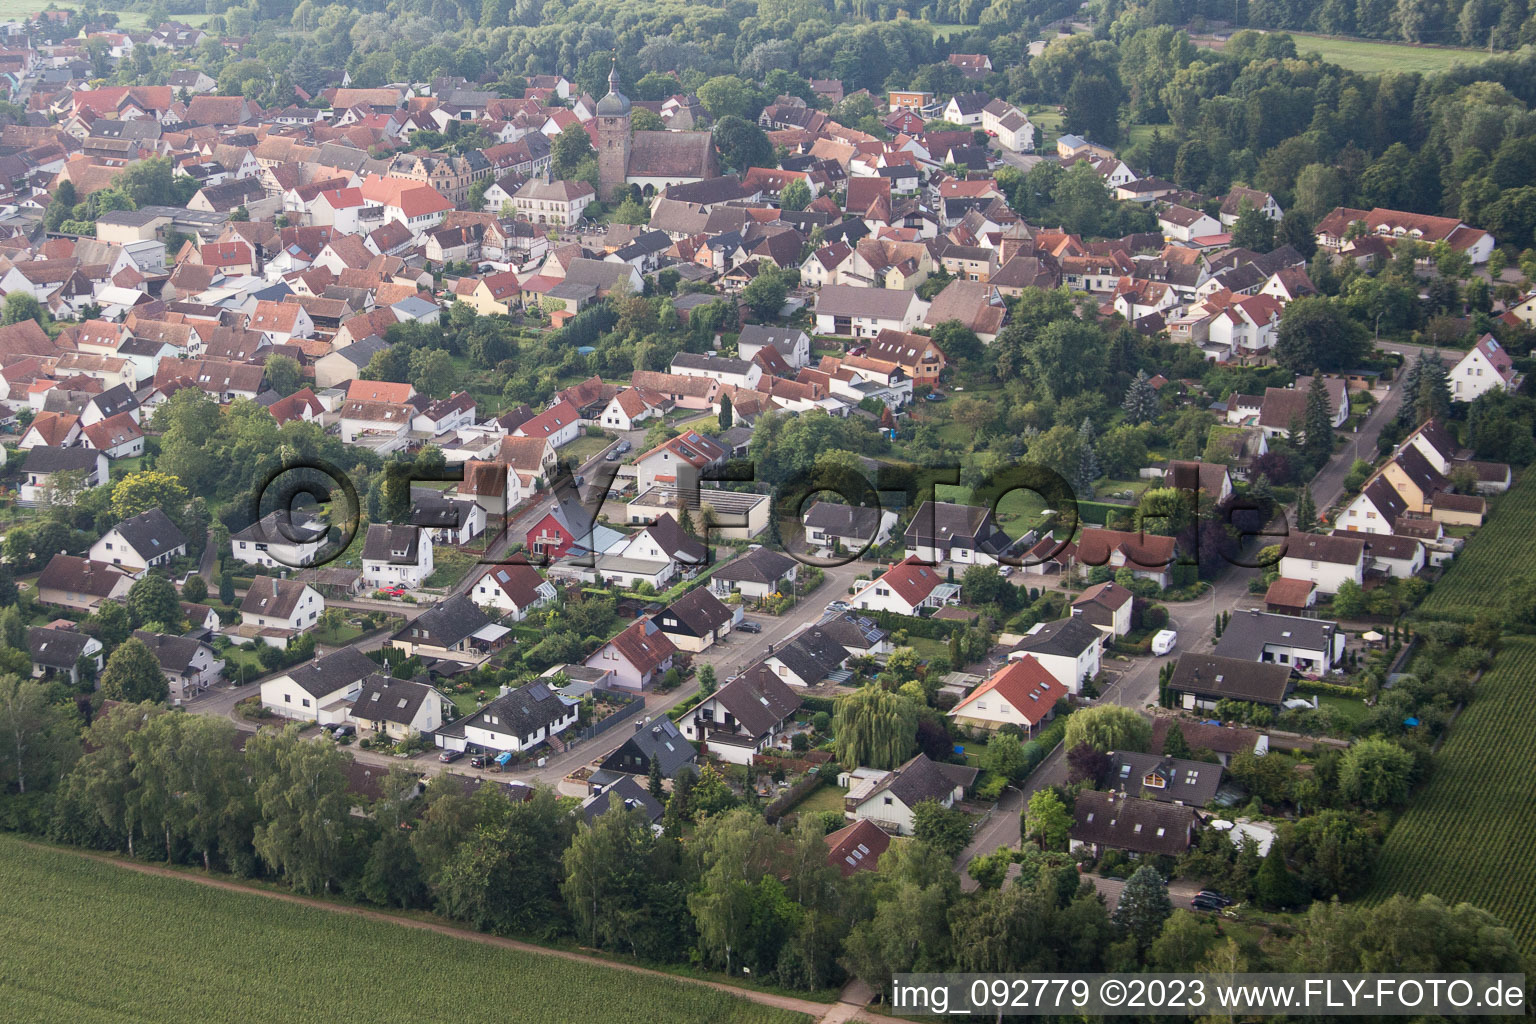 Maxburgstr in the district Billigheim in Billigheim-Ingenheim in the state Rhineland-Palatinate, Germany from above